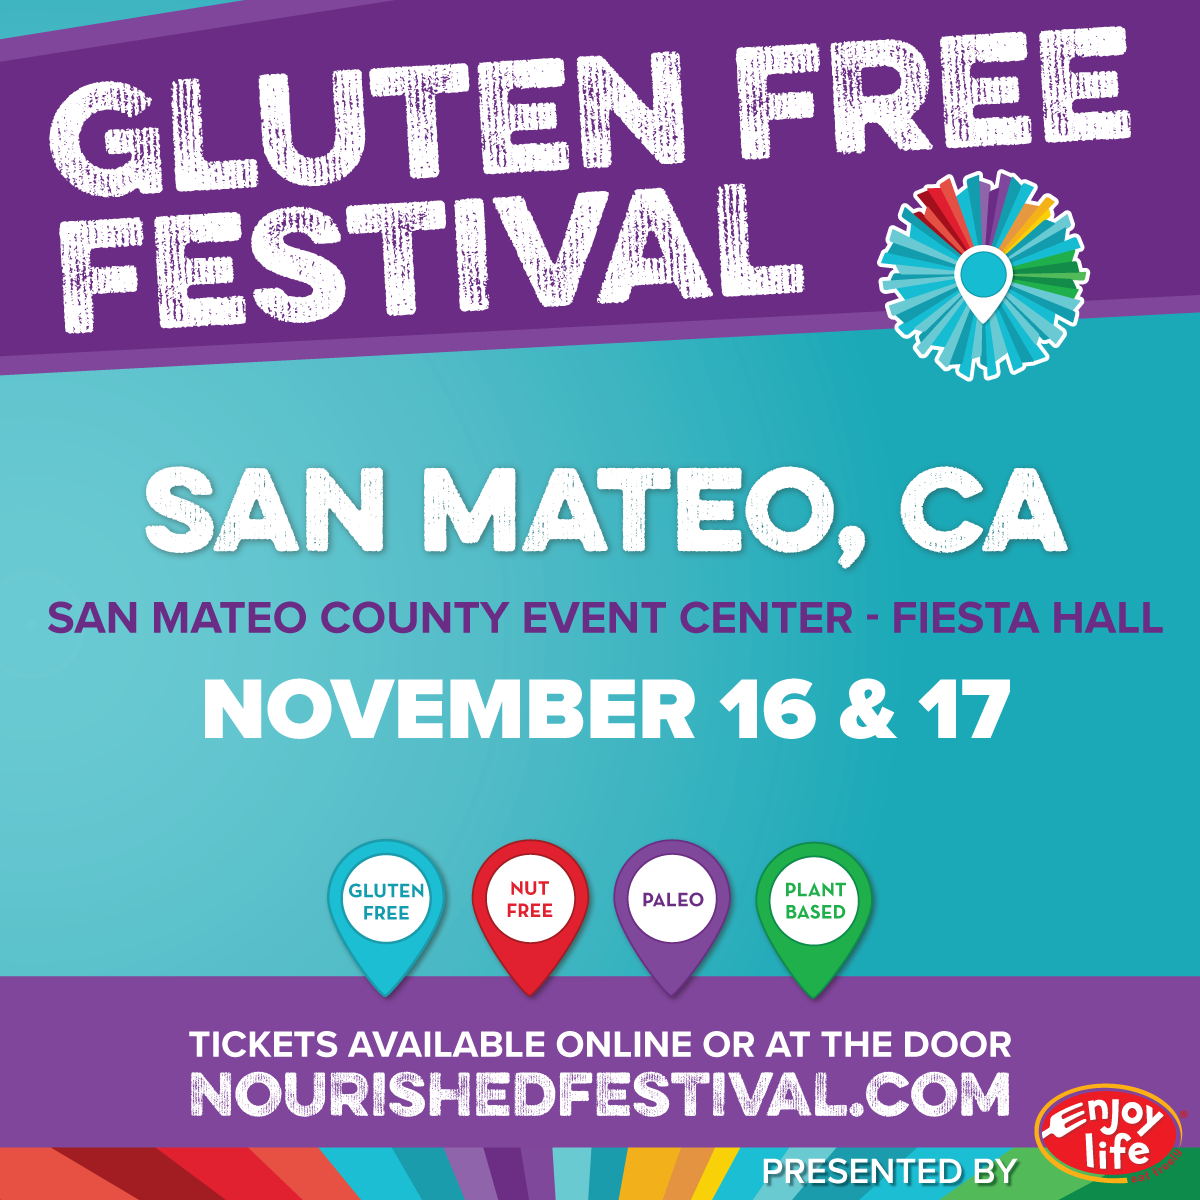 San Mateo Gluten-Free Festival November 16th-17th at the San Mateo County Event Center, Fiesta Hall